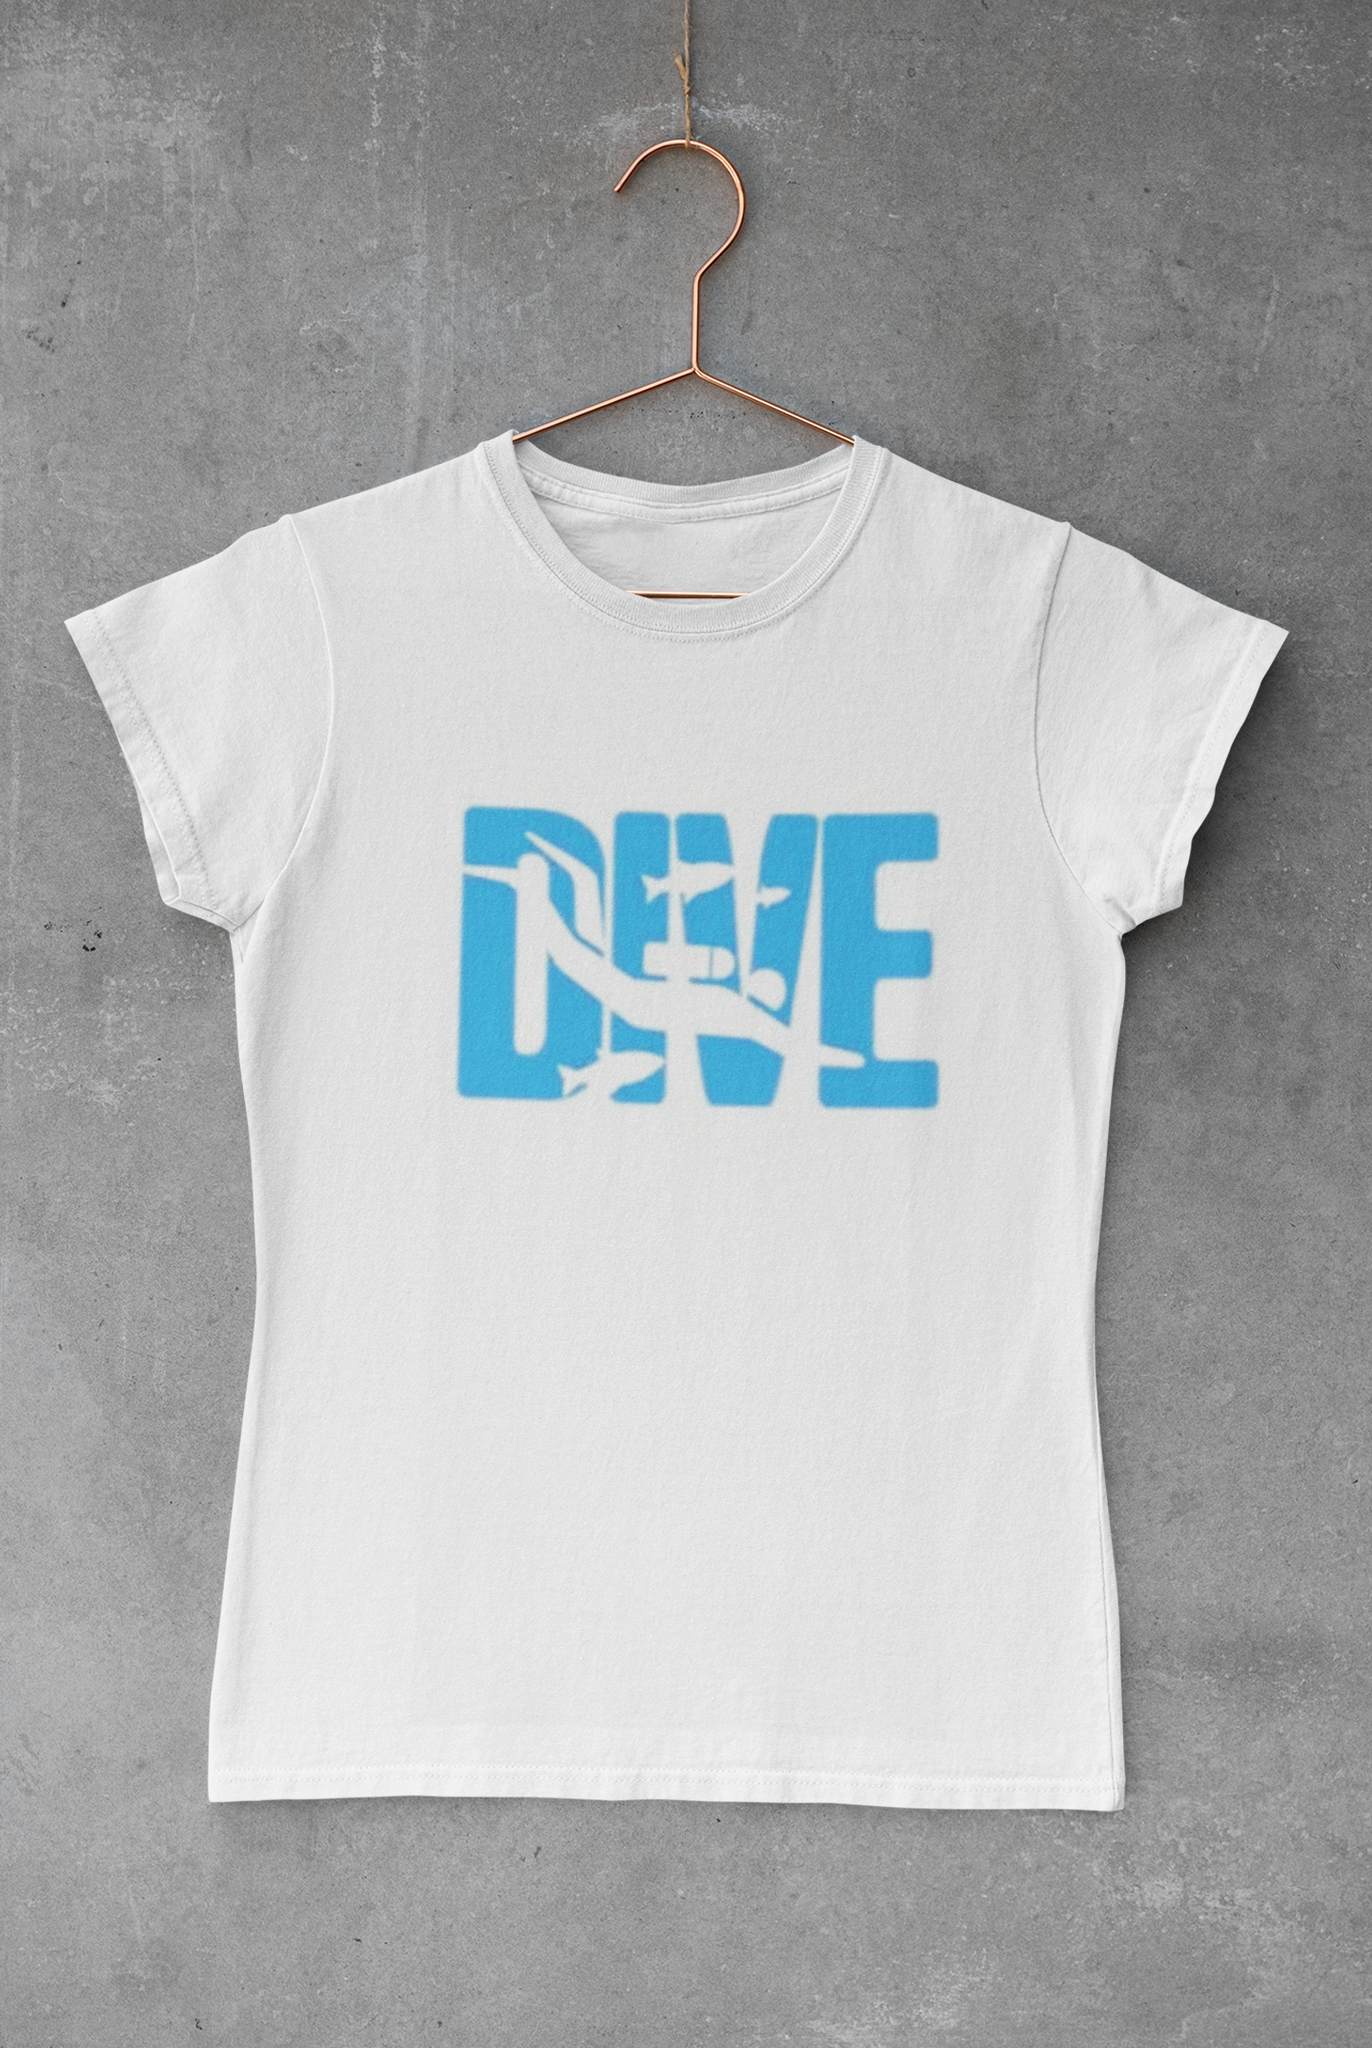 white Scuba diving T-Shirt for Women | DIVE - Slim Fit